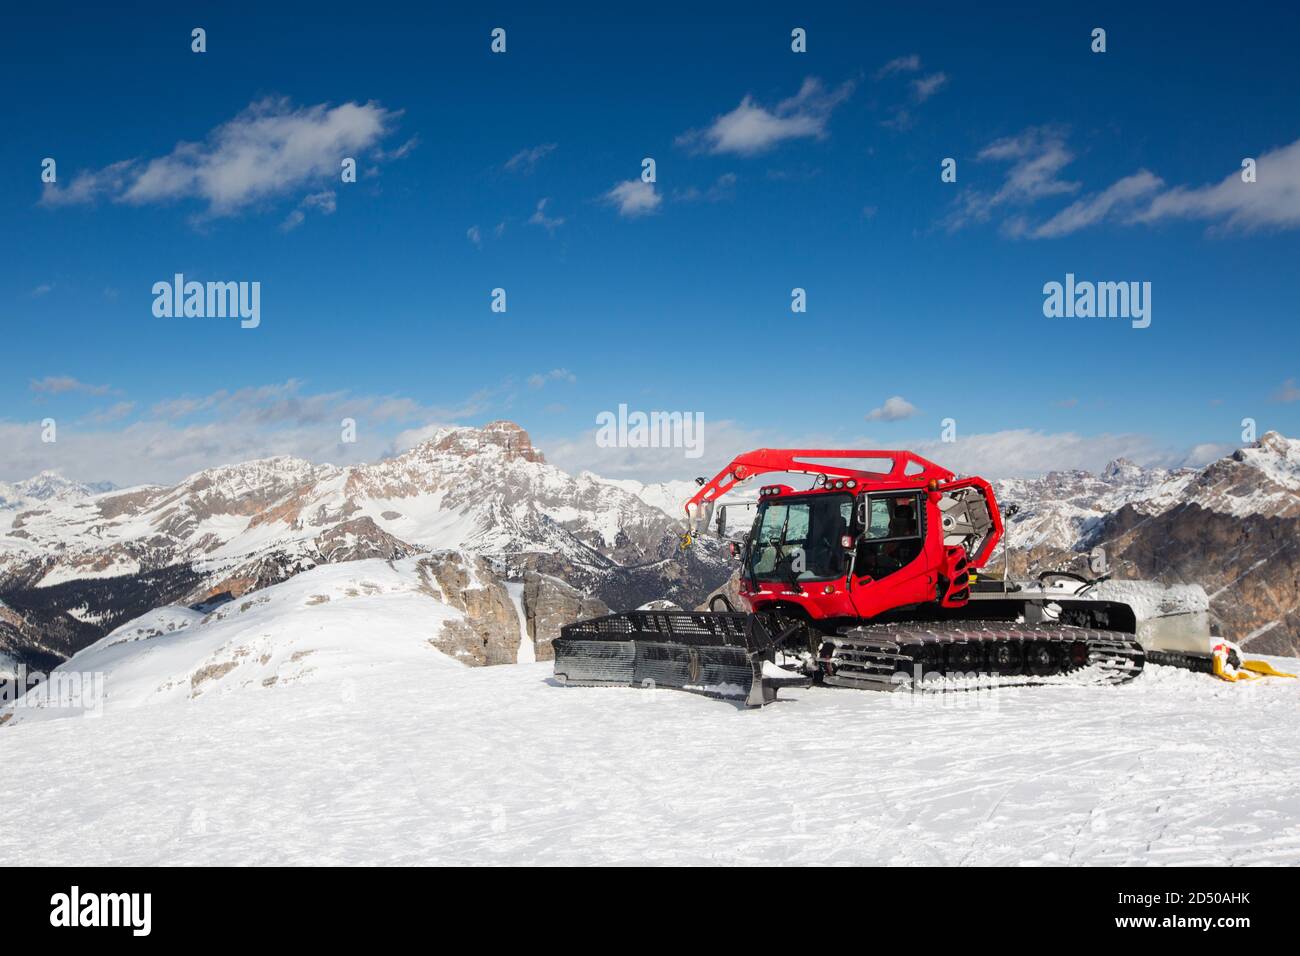 Red modern snowcat ratrack with snowplow snow grooming machine preparing ski slope piste hill at alpine skiing winter resort Cortina d'Ampezzo in Ital Stock Photo